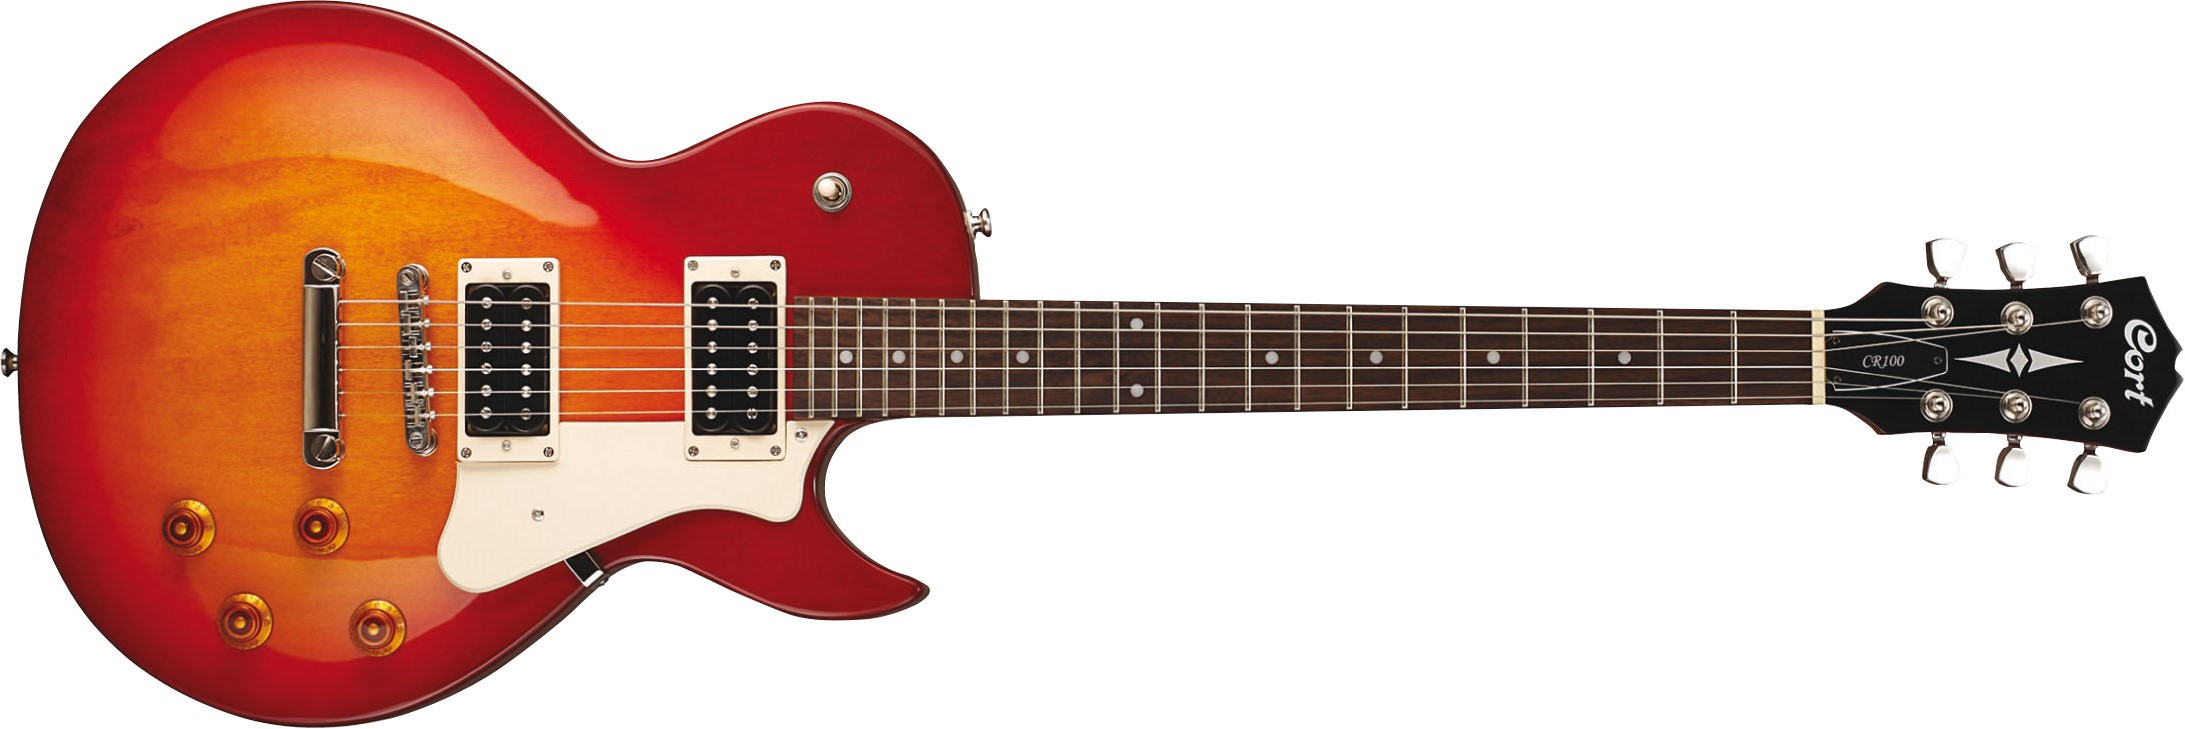 Cort Cr100 Crs Classic Rock Hh Ht - Cherry Red Sunburst - Enkel gesneden elektrische gitaar - Variation 1